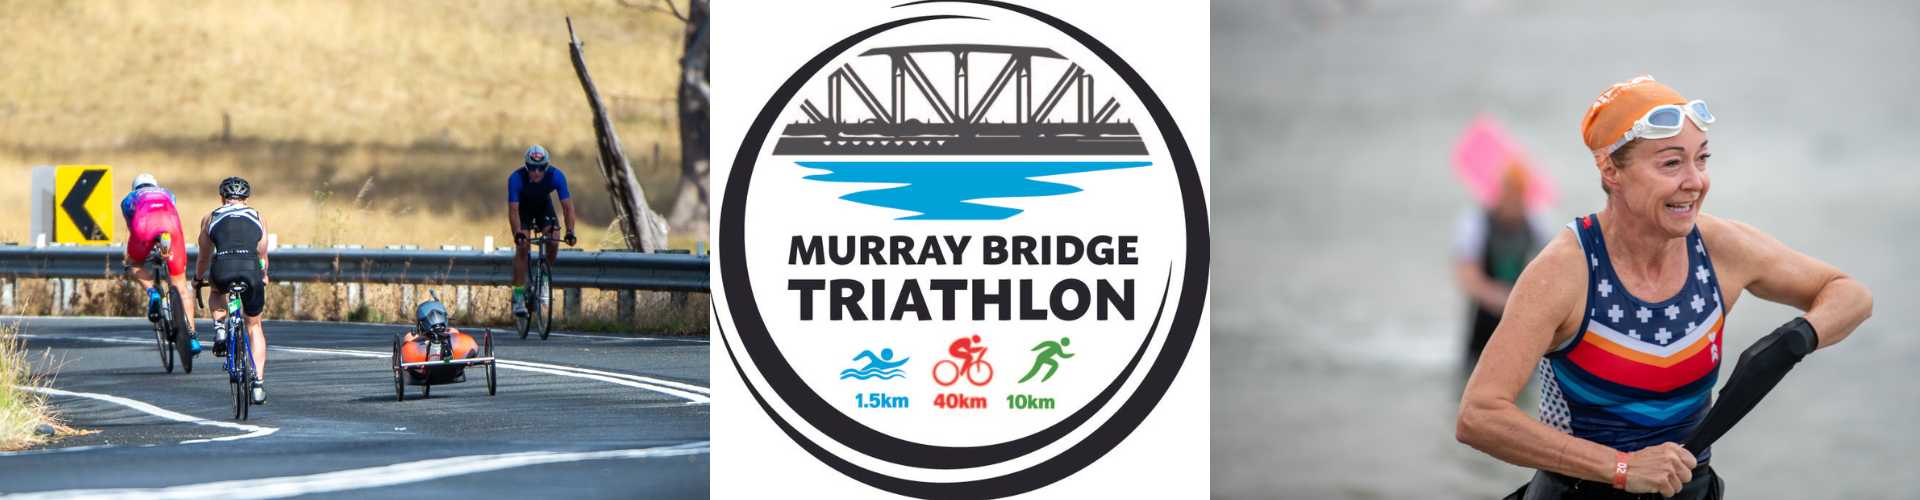 Murray Bridge Triathlon